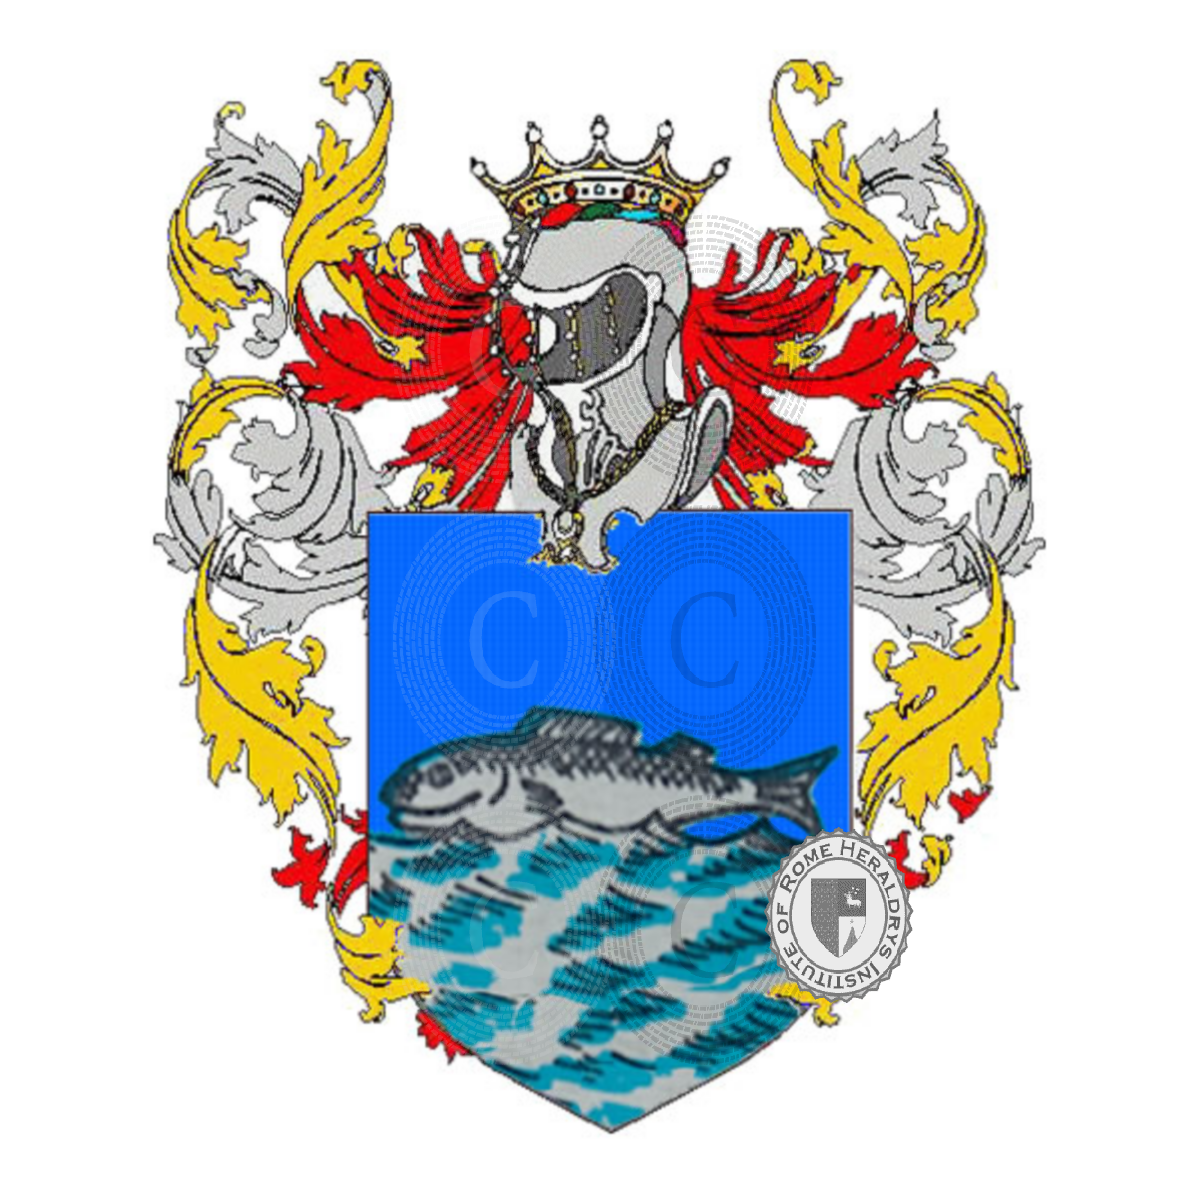 Wappen der FamilieImpellizzeri, Pellizzeri